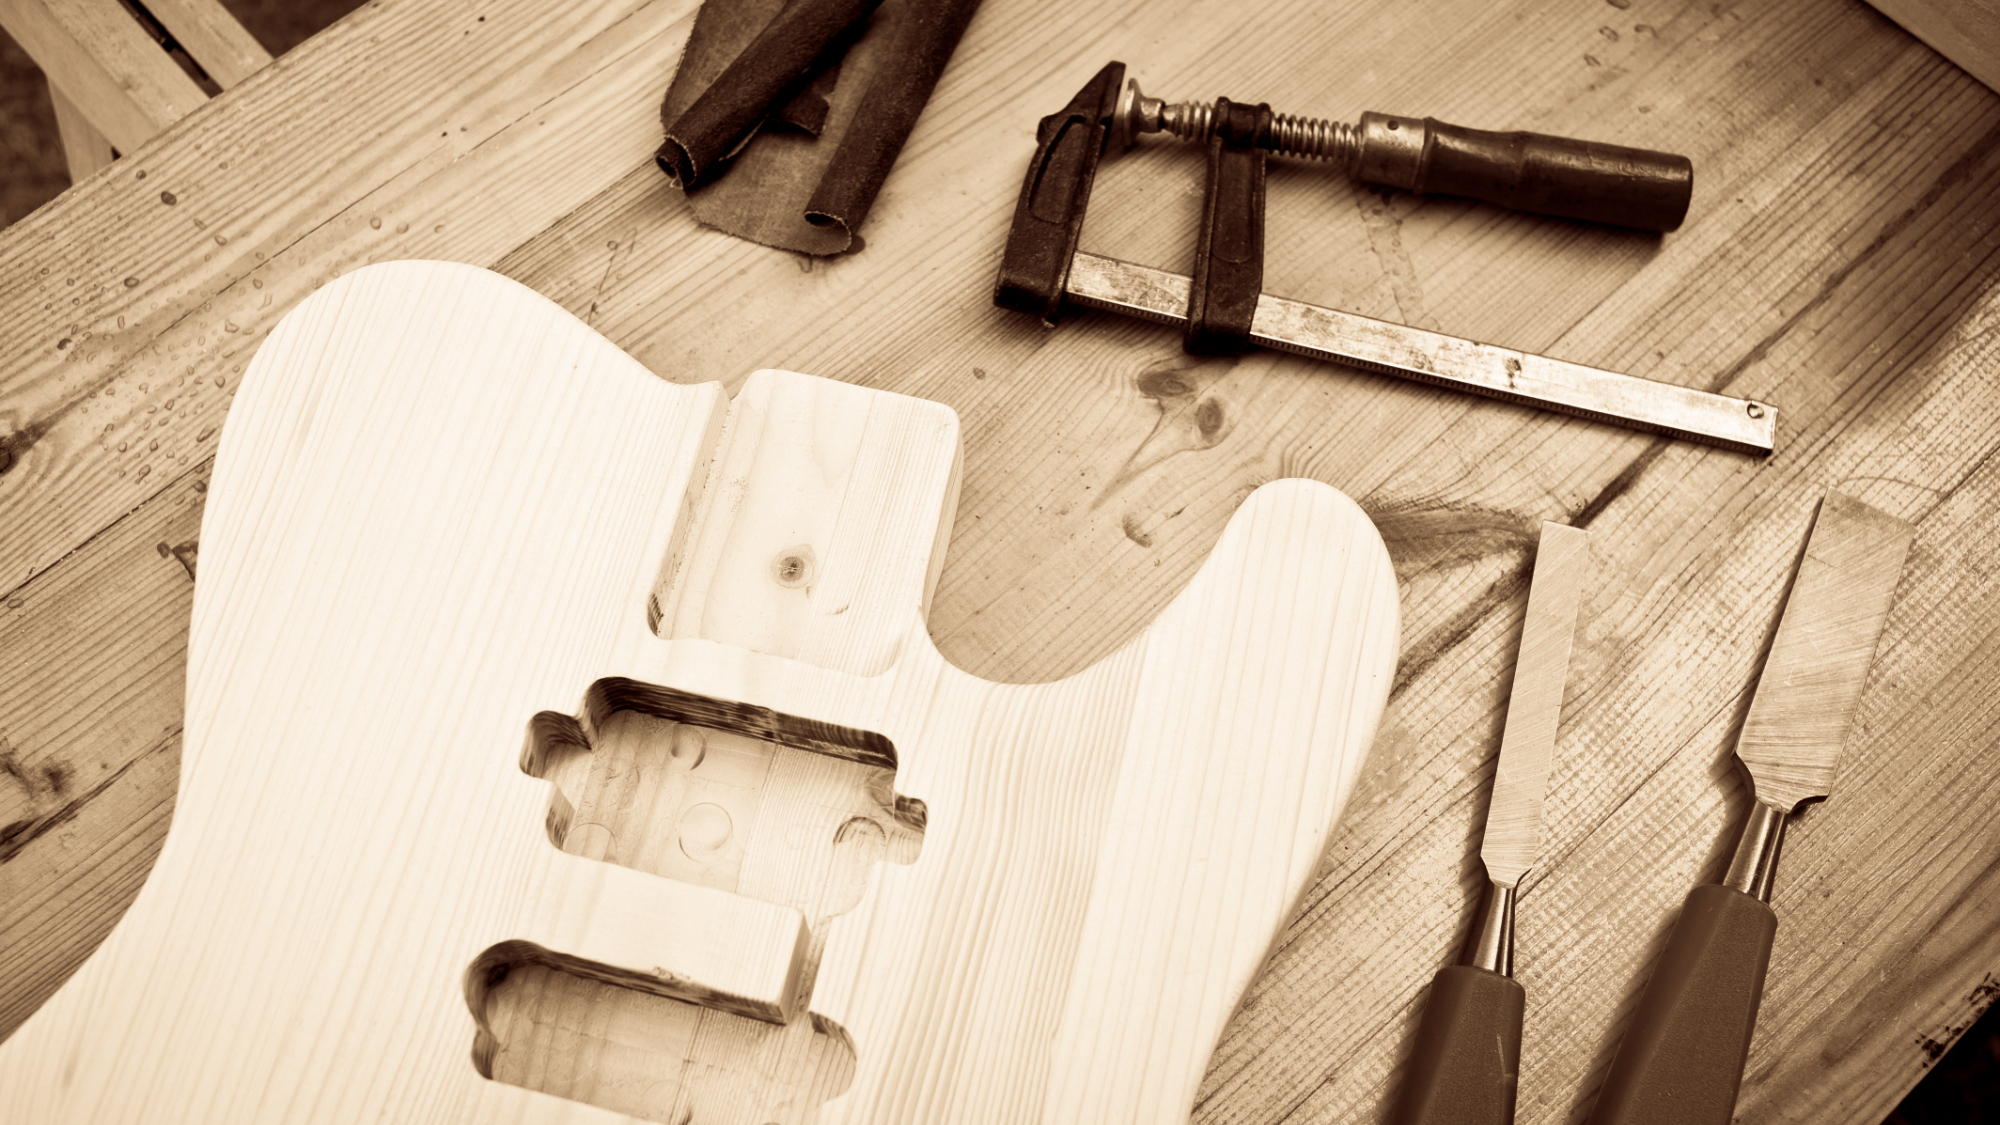 Tele-style DIY guitar kit on a workbench